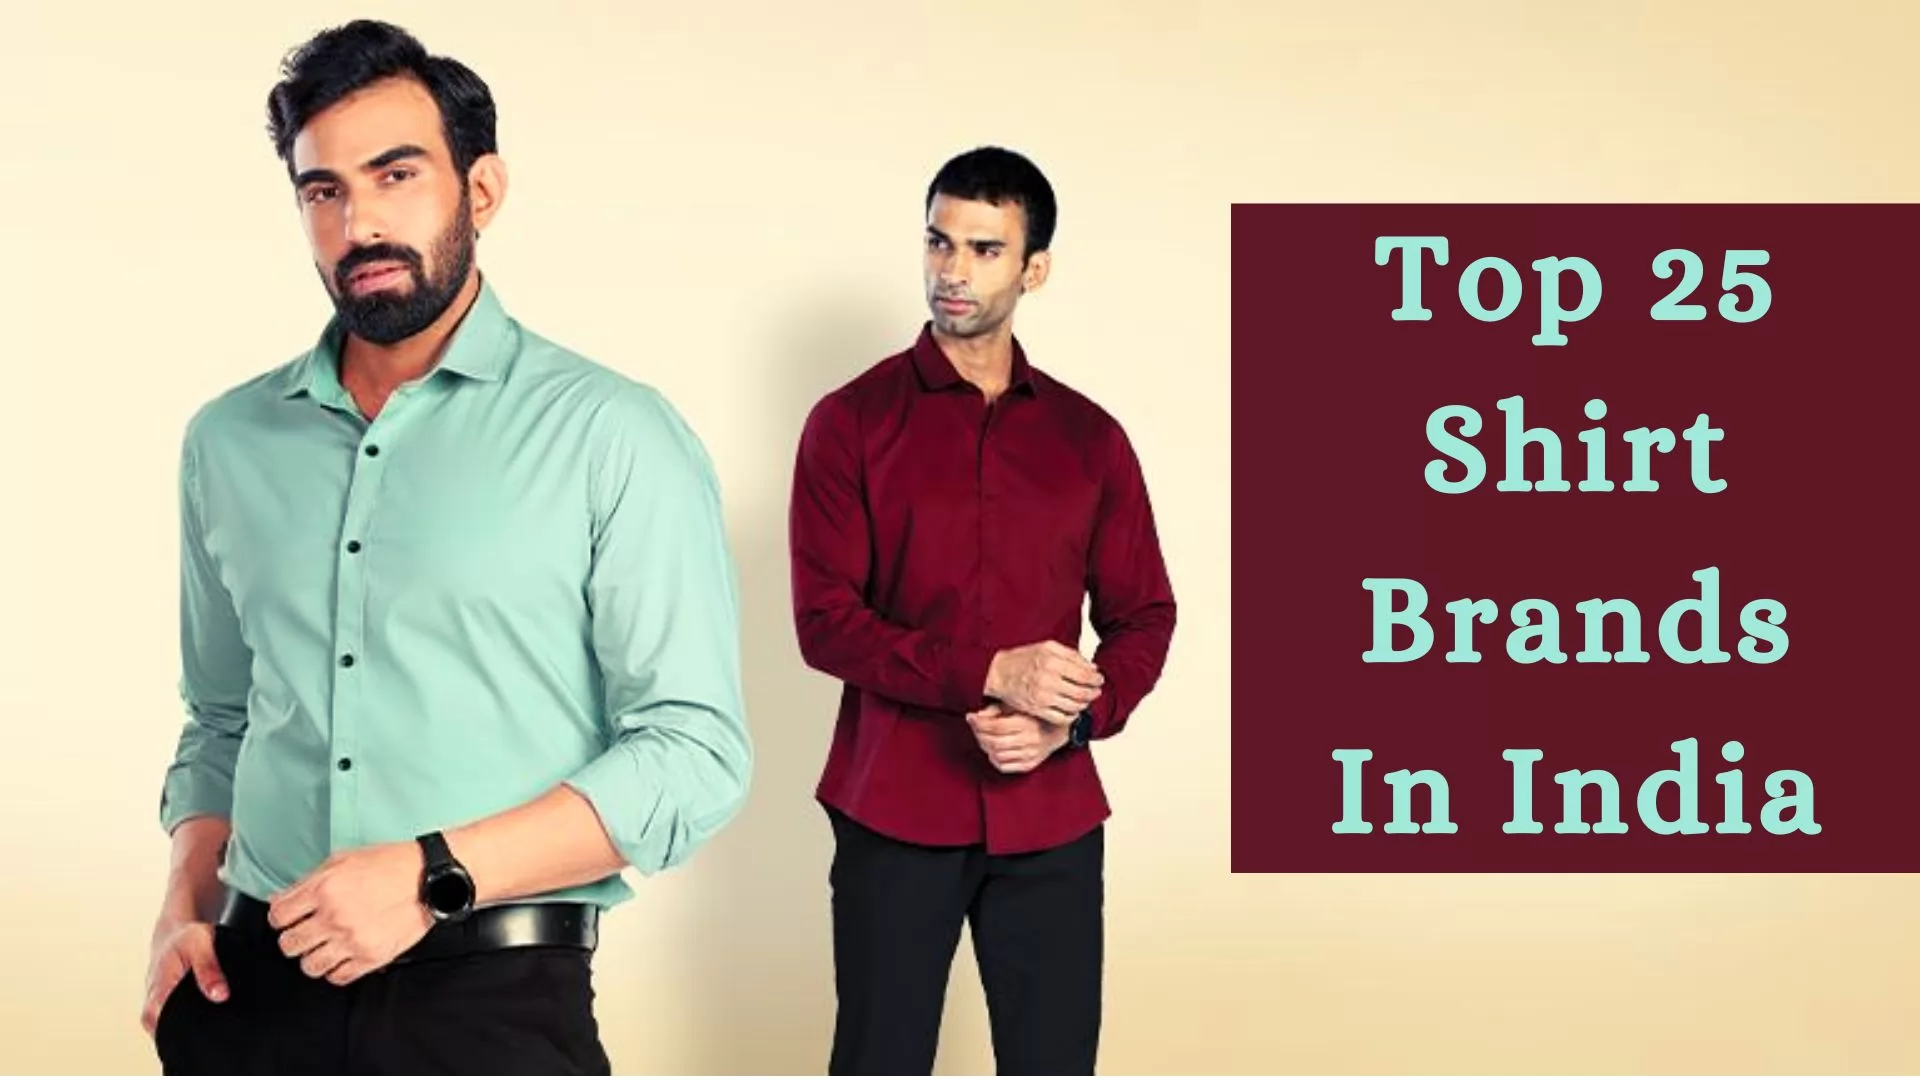 Top 25 Shirt Brands In India